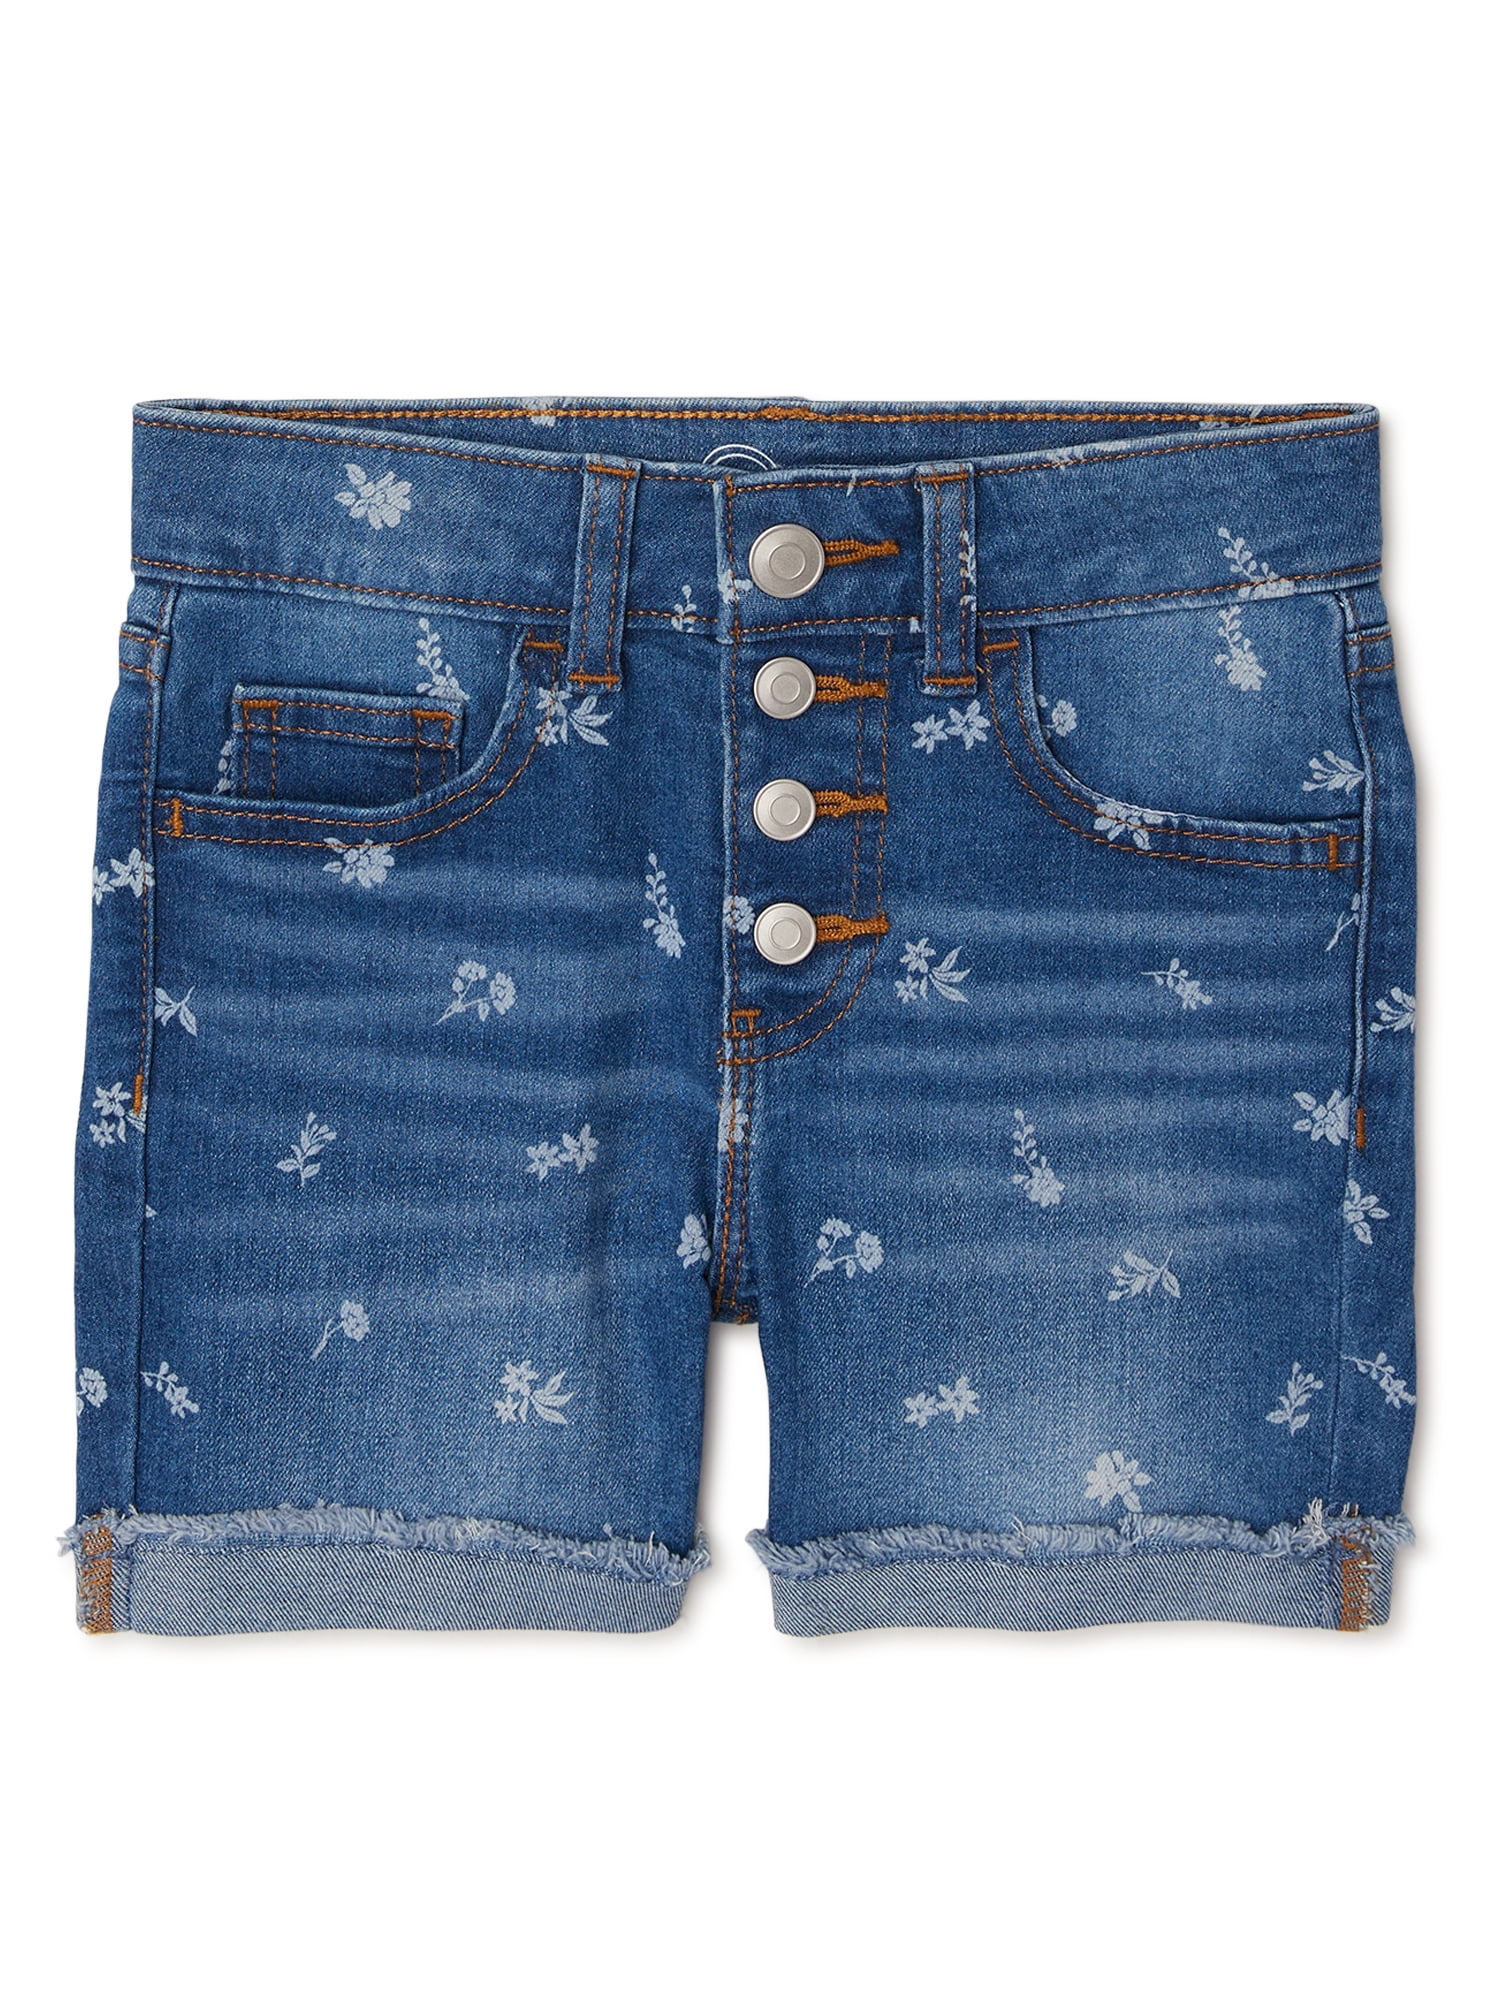 Summer's Blue Hot Pants Jeans With Braces Denim Shorts UK Size 6-14 HOT STYLE 